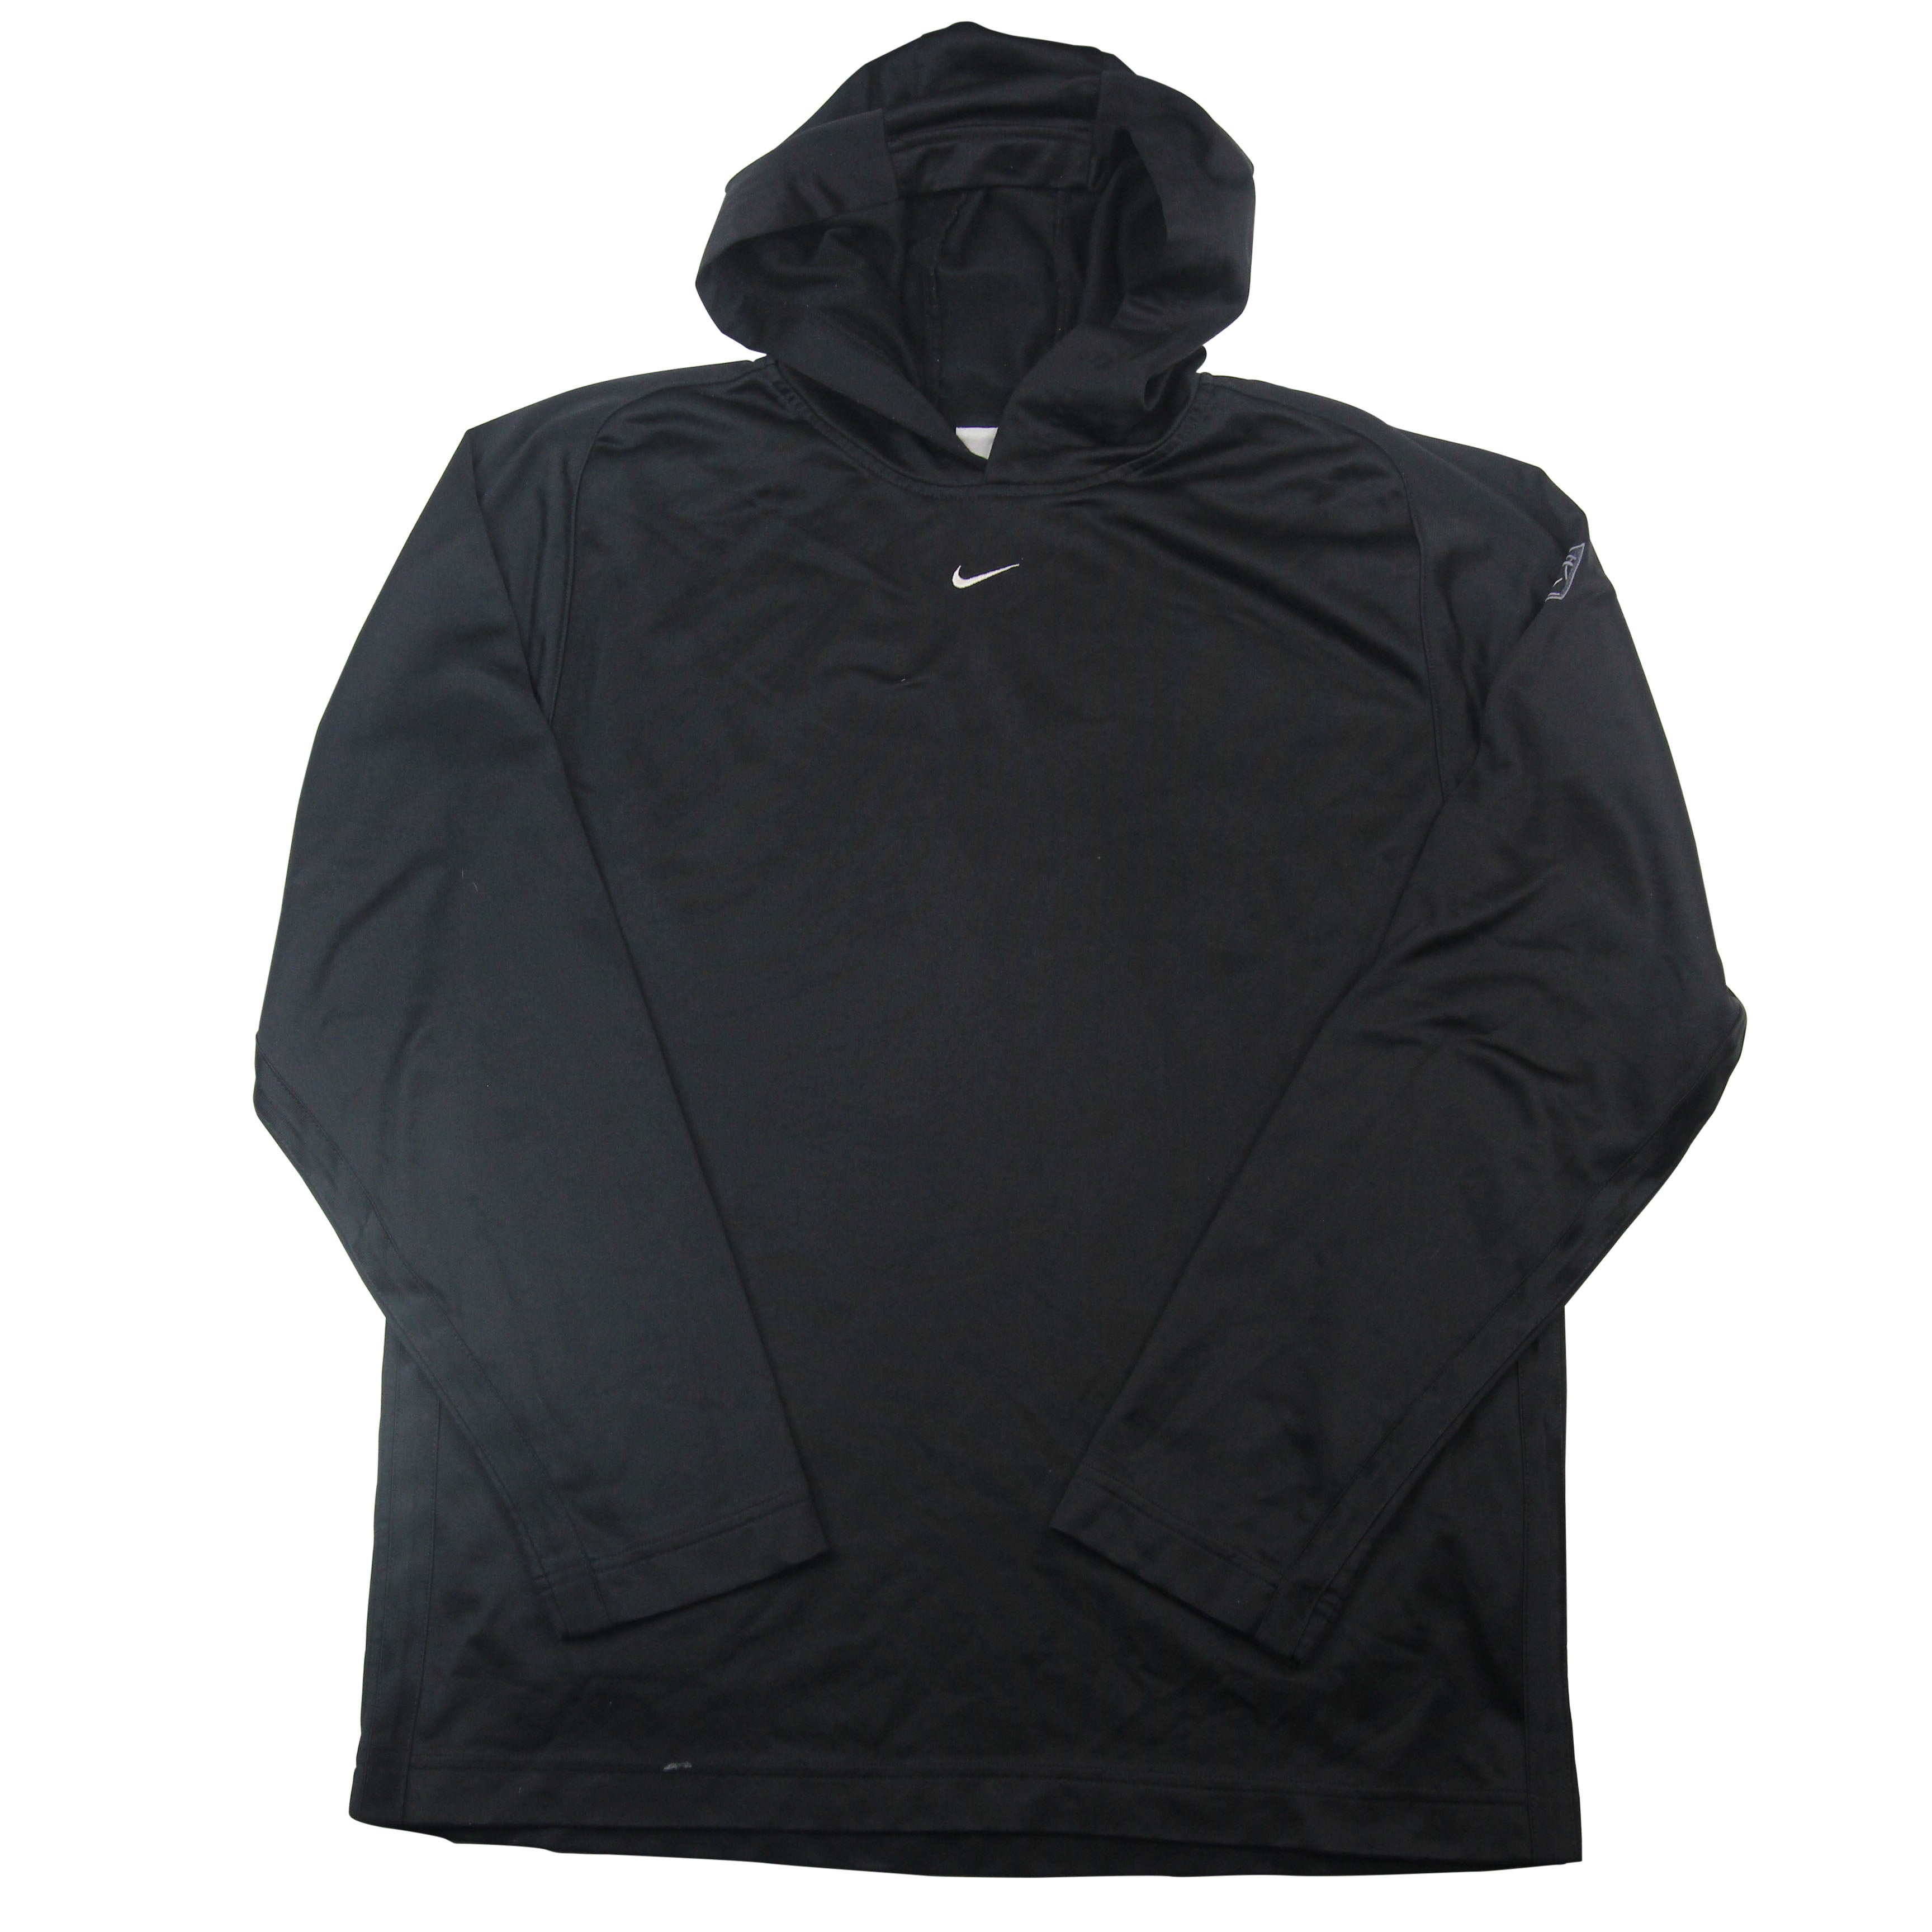 Rare black Nike center swoosh hoodie! Love the